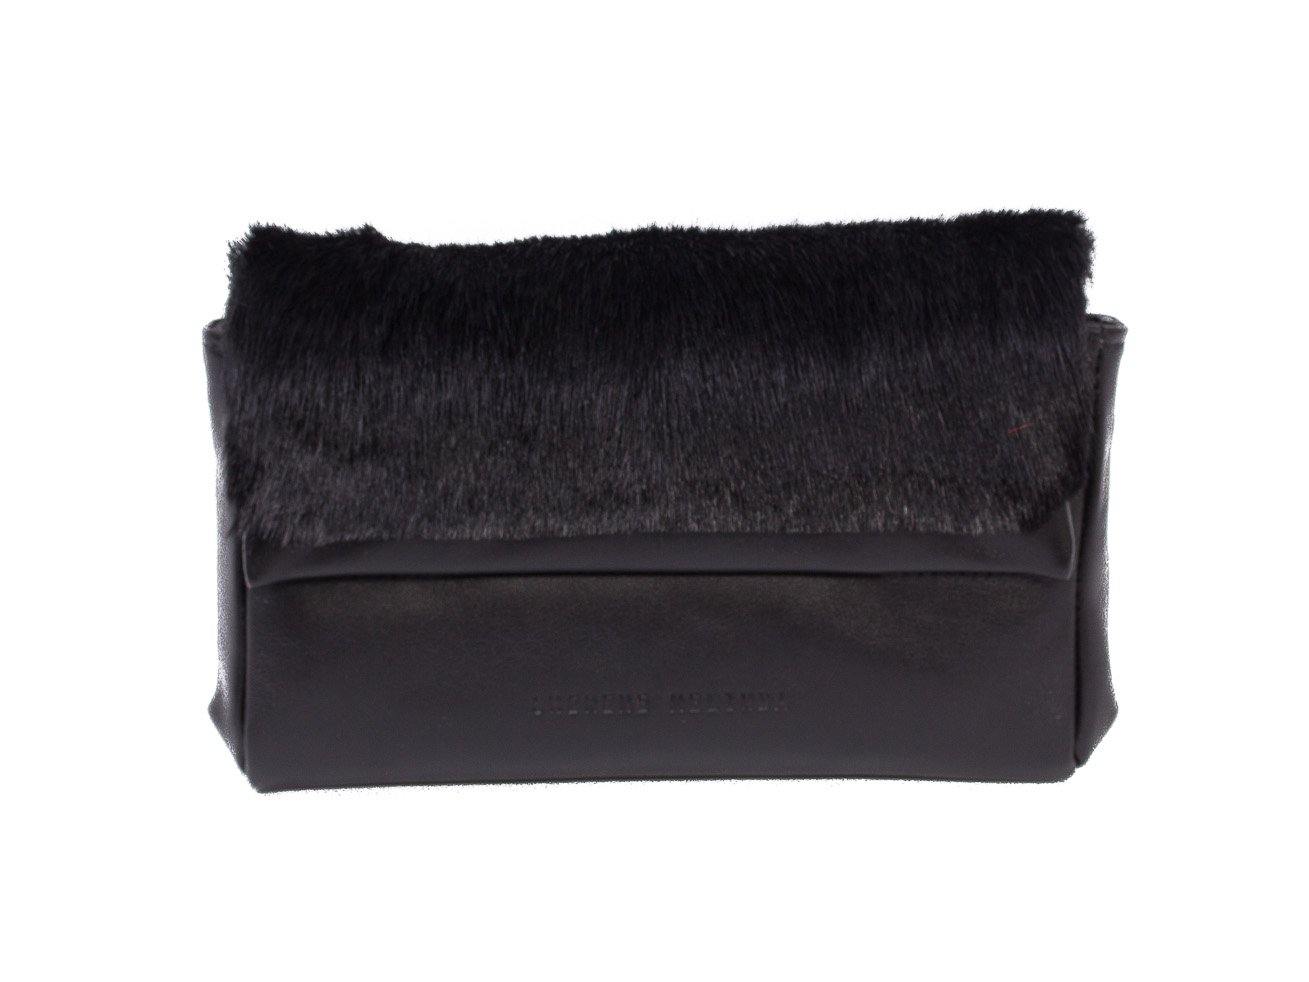 sherene melinda springbok hair-on-hide black leather Sophy SS18 Clutch Bag stripe front strap